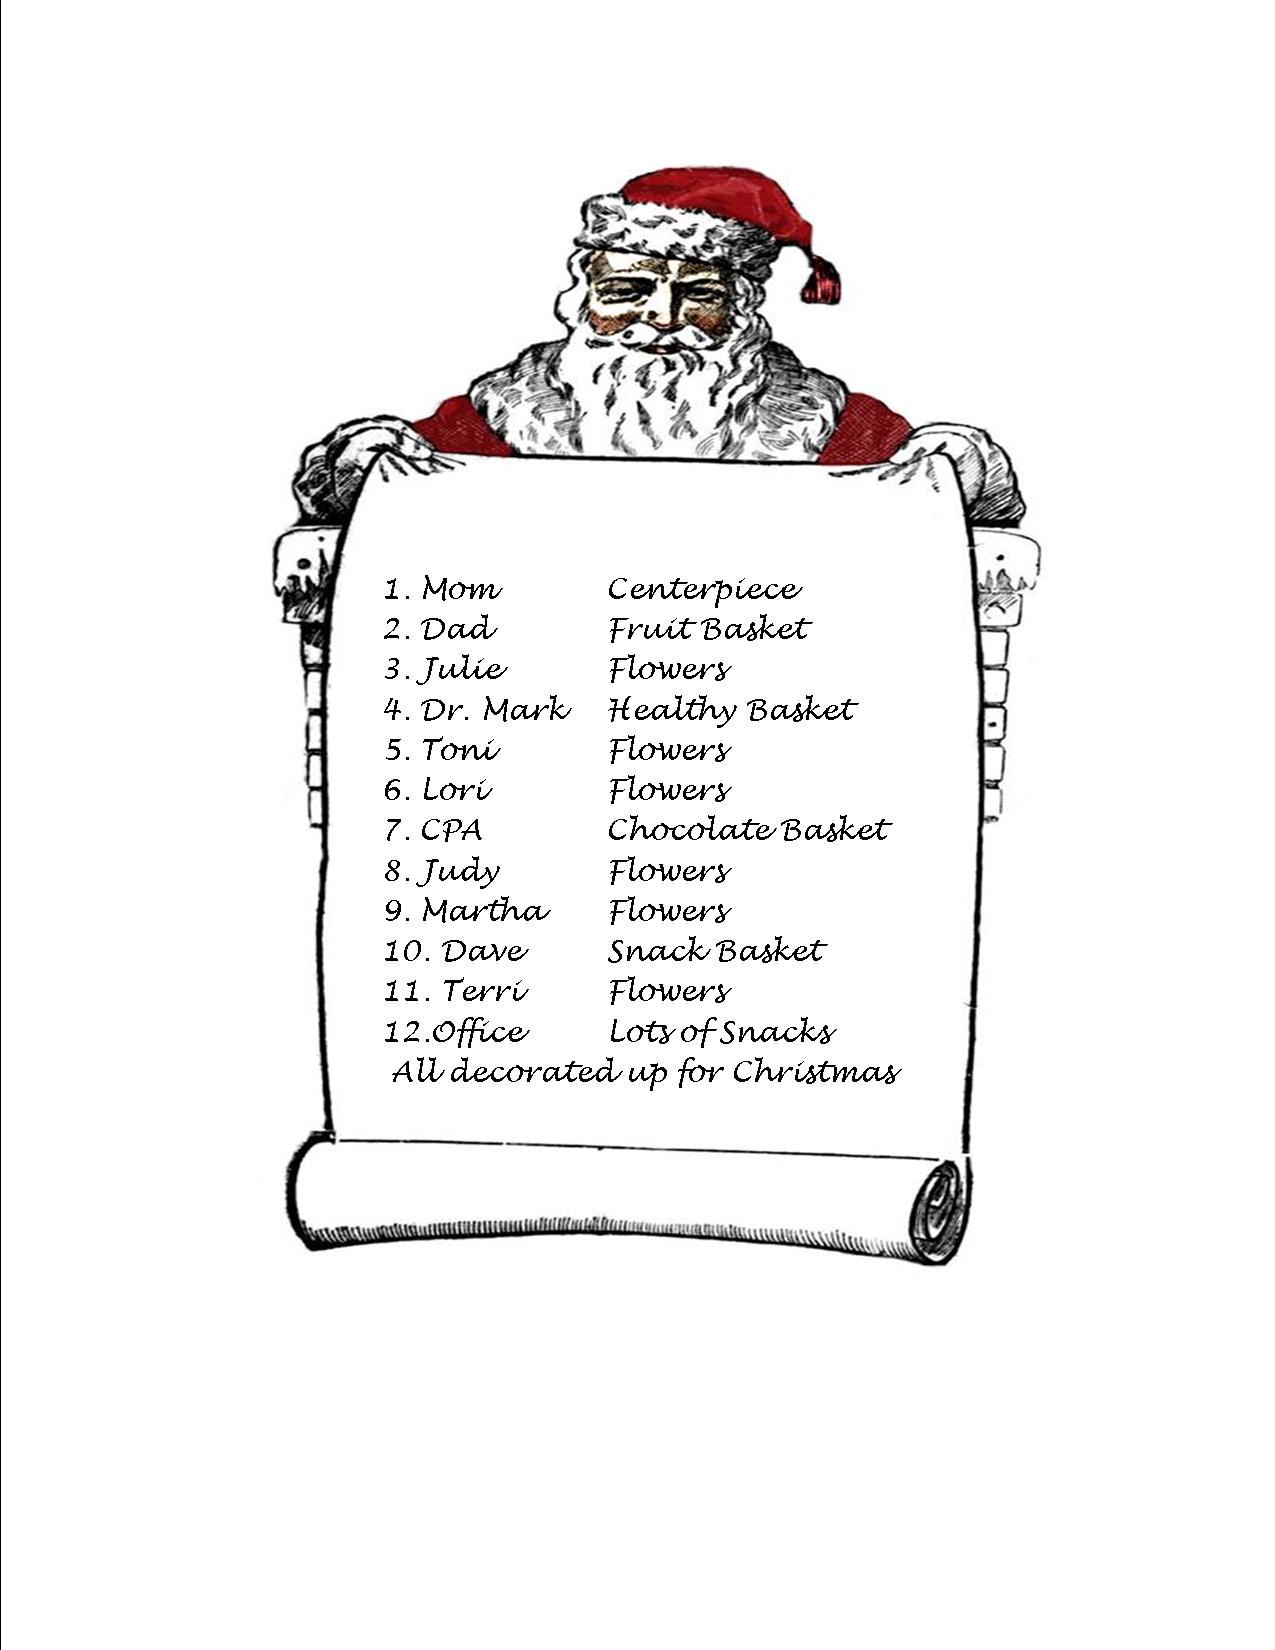 Santa and a list